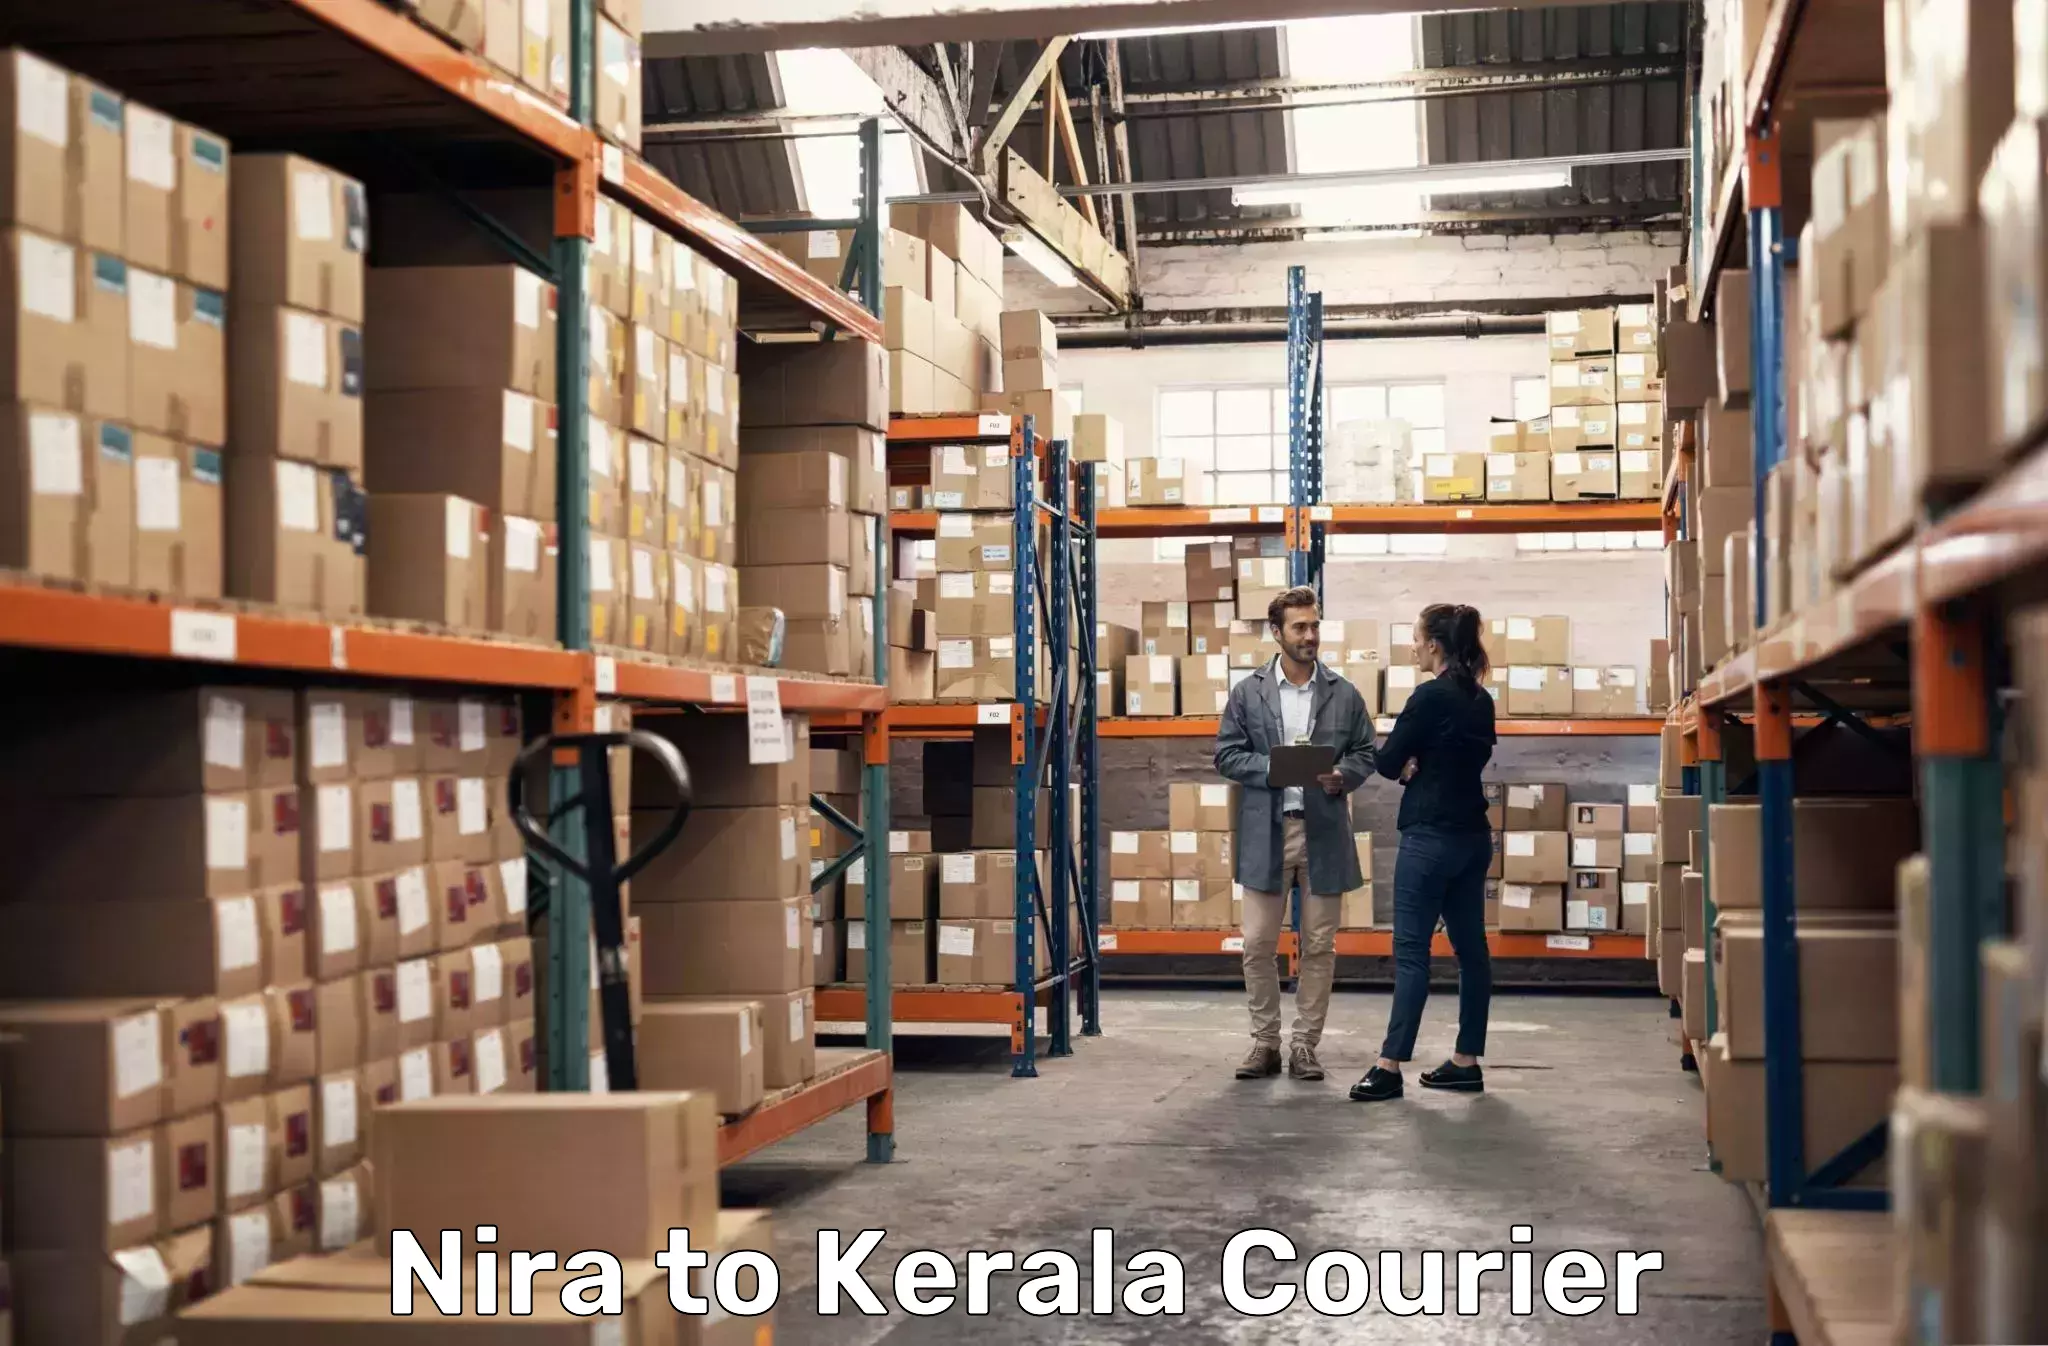 Express delivery capabilities Nira to Kerala